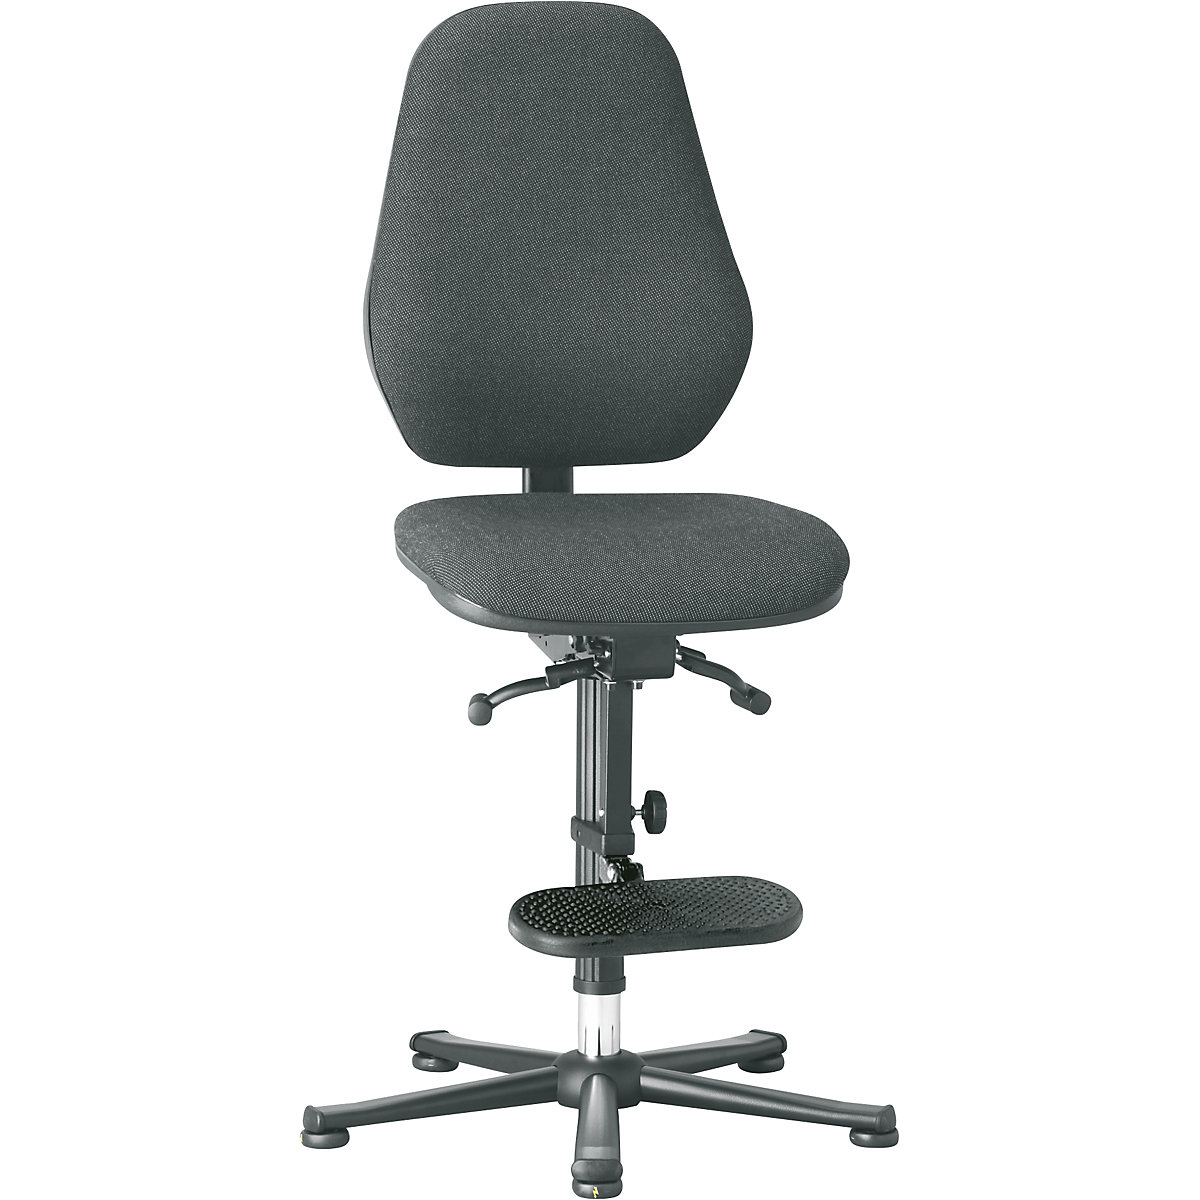 Pracovní otočná židle – bimos, s ochranou ESD, plynová pružina, patky, pomůcka pro výstup, černý látkový potah-4